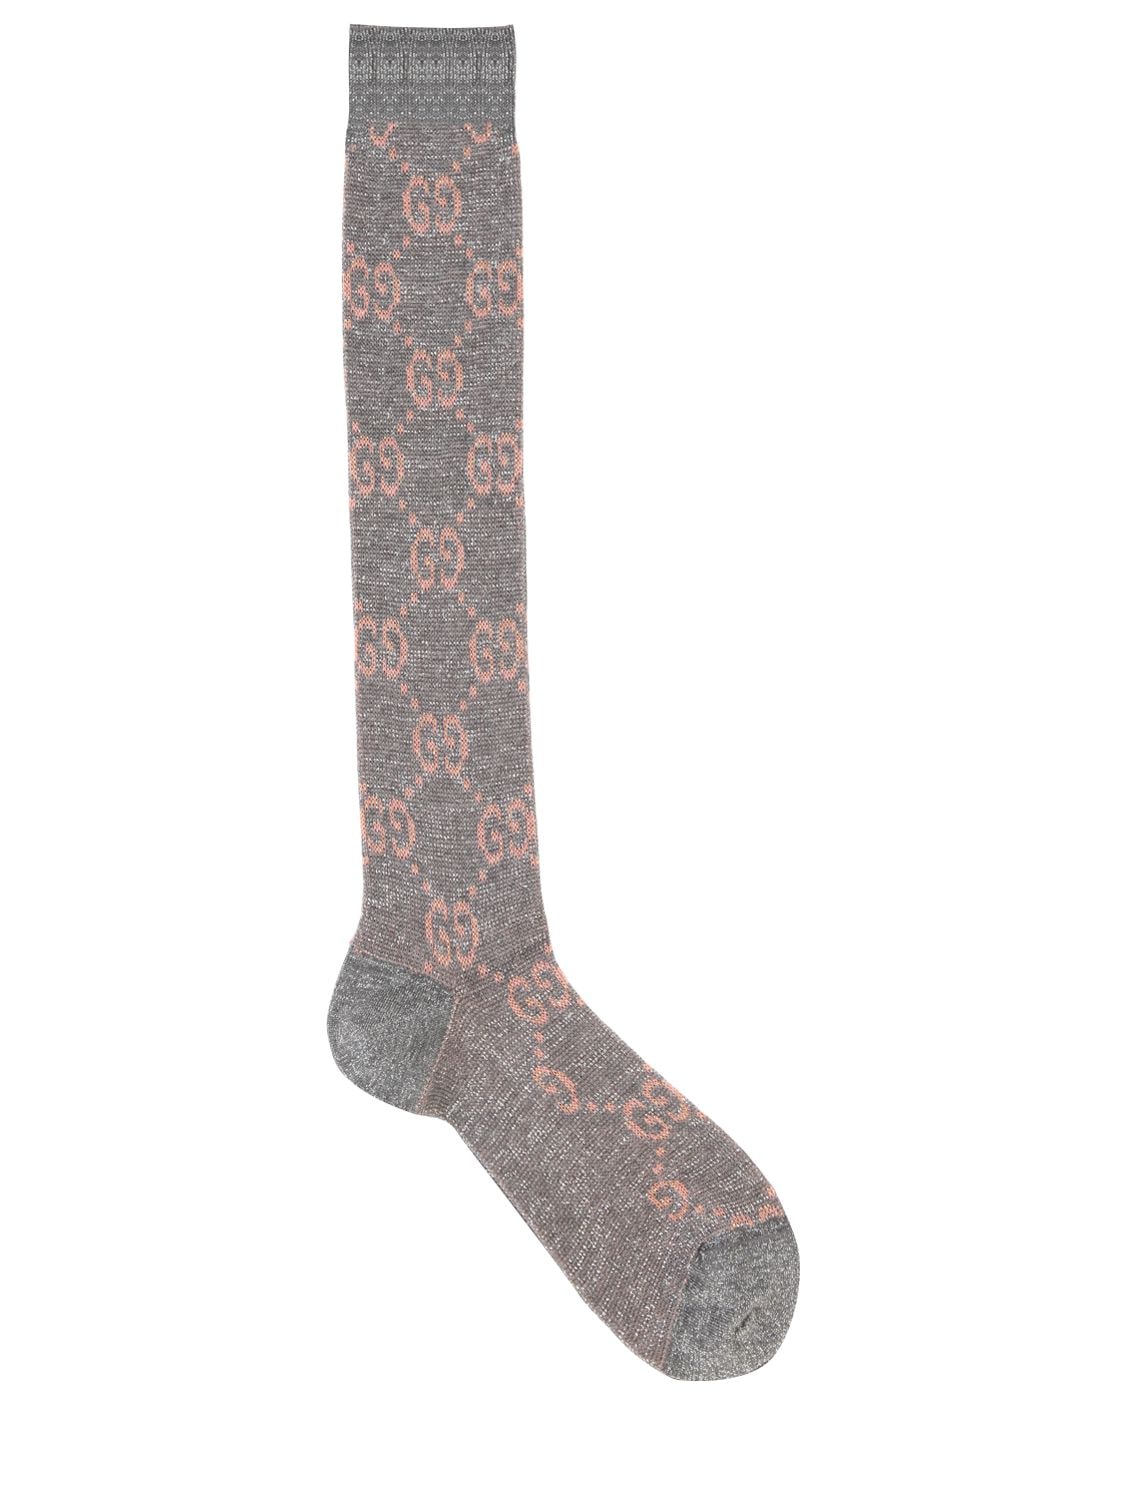 Gucci Gg Supreme Lurex Socks In Grey/pink